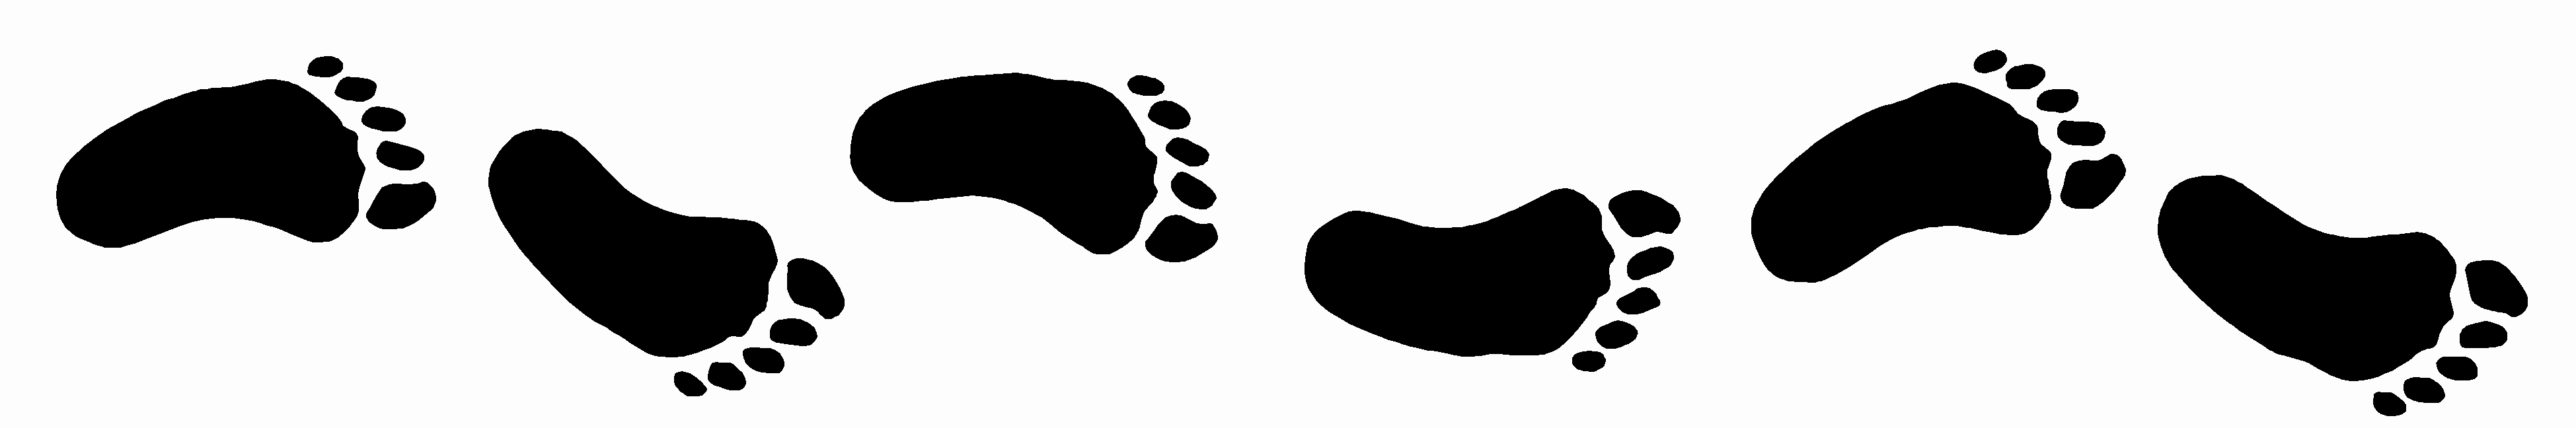 Walking Footprints Clipart